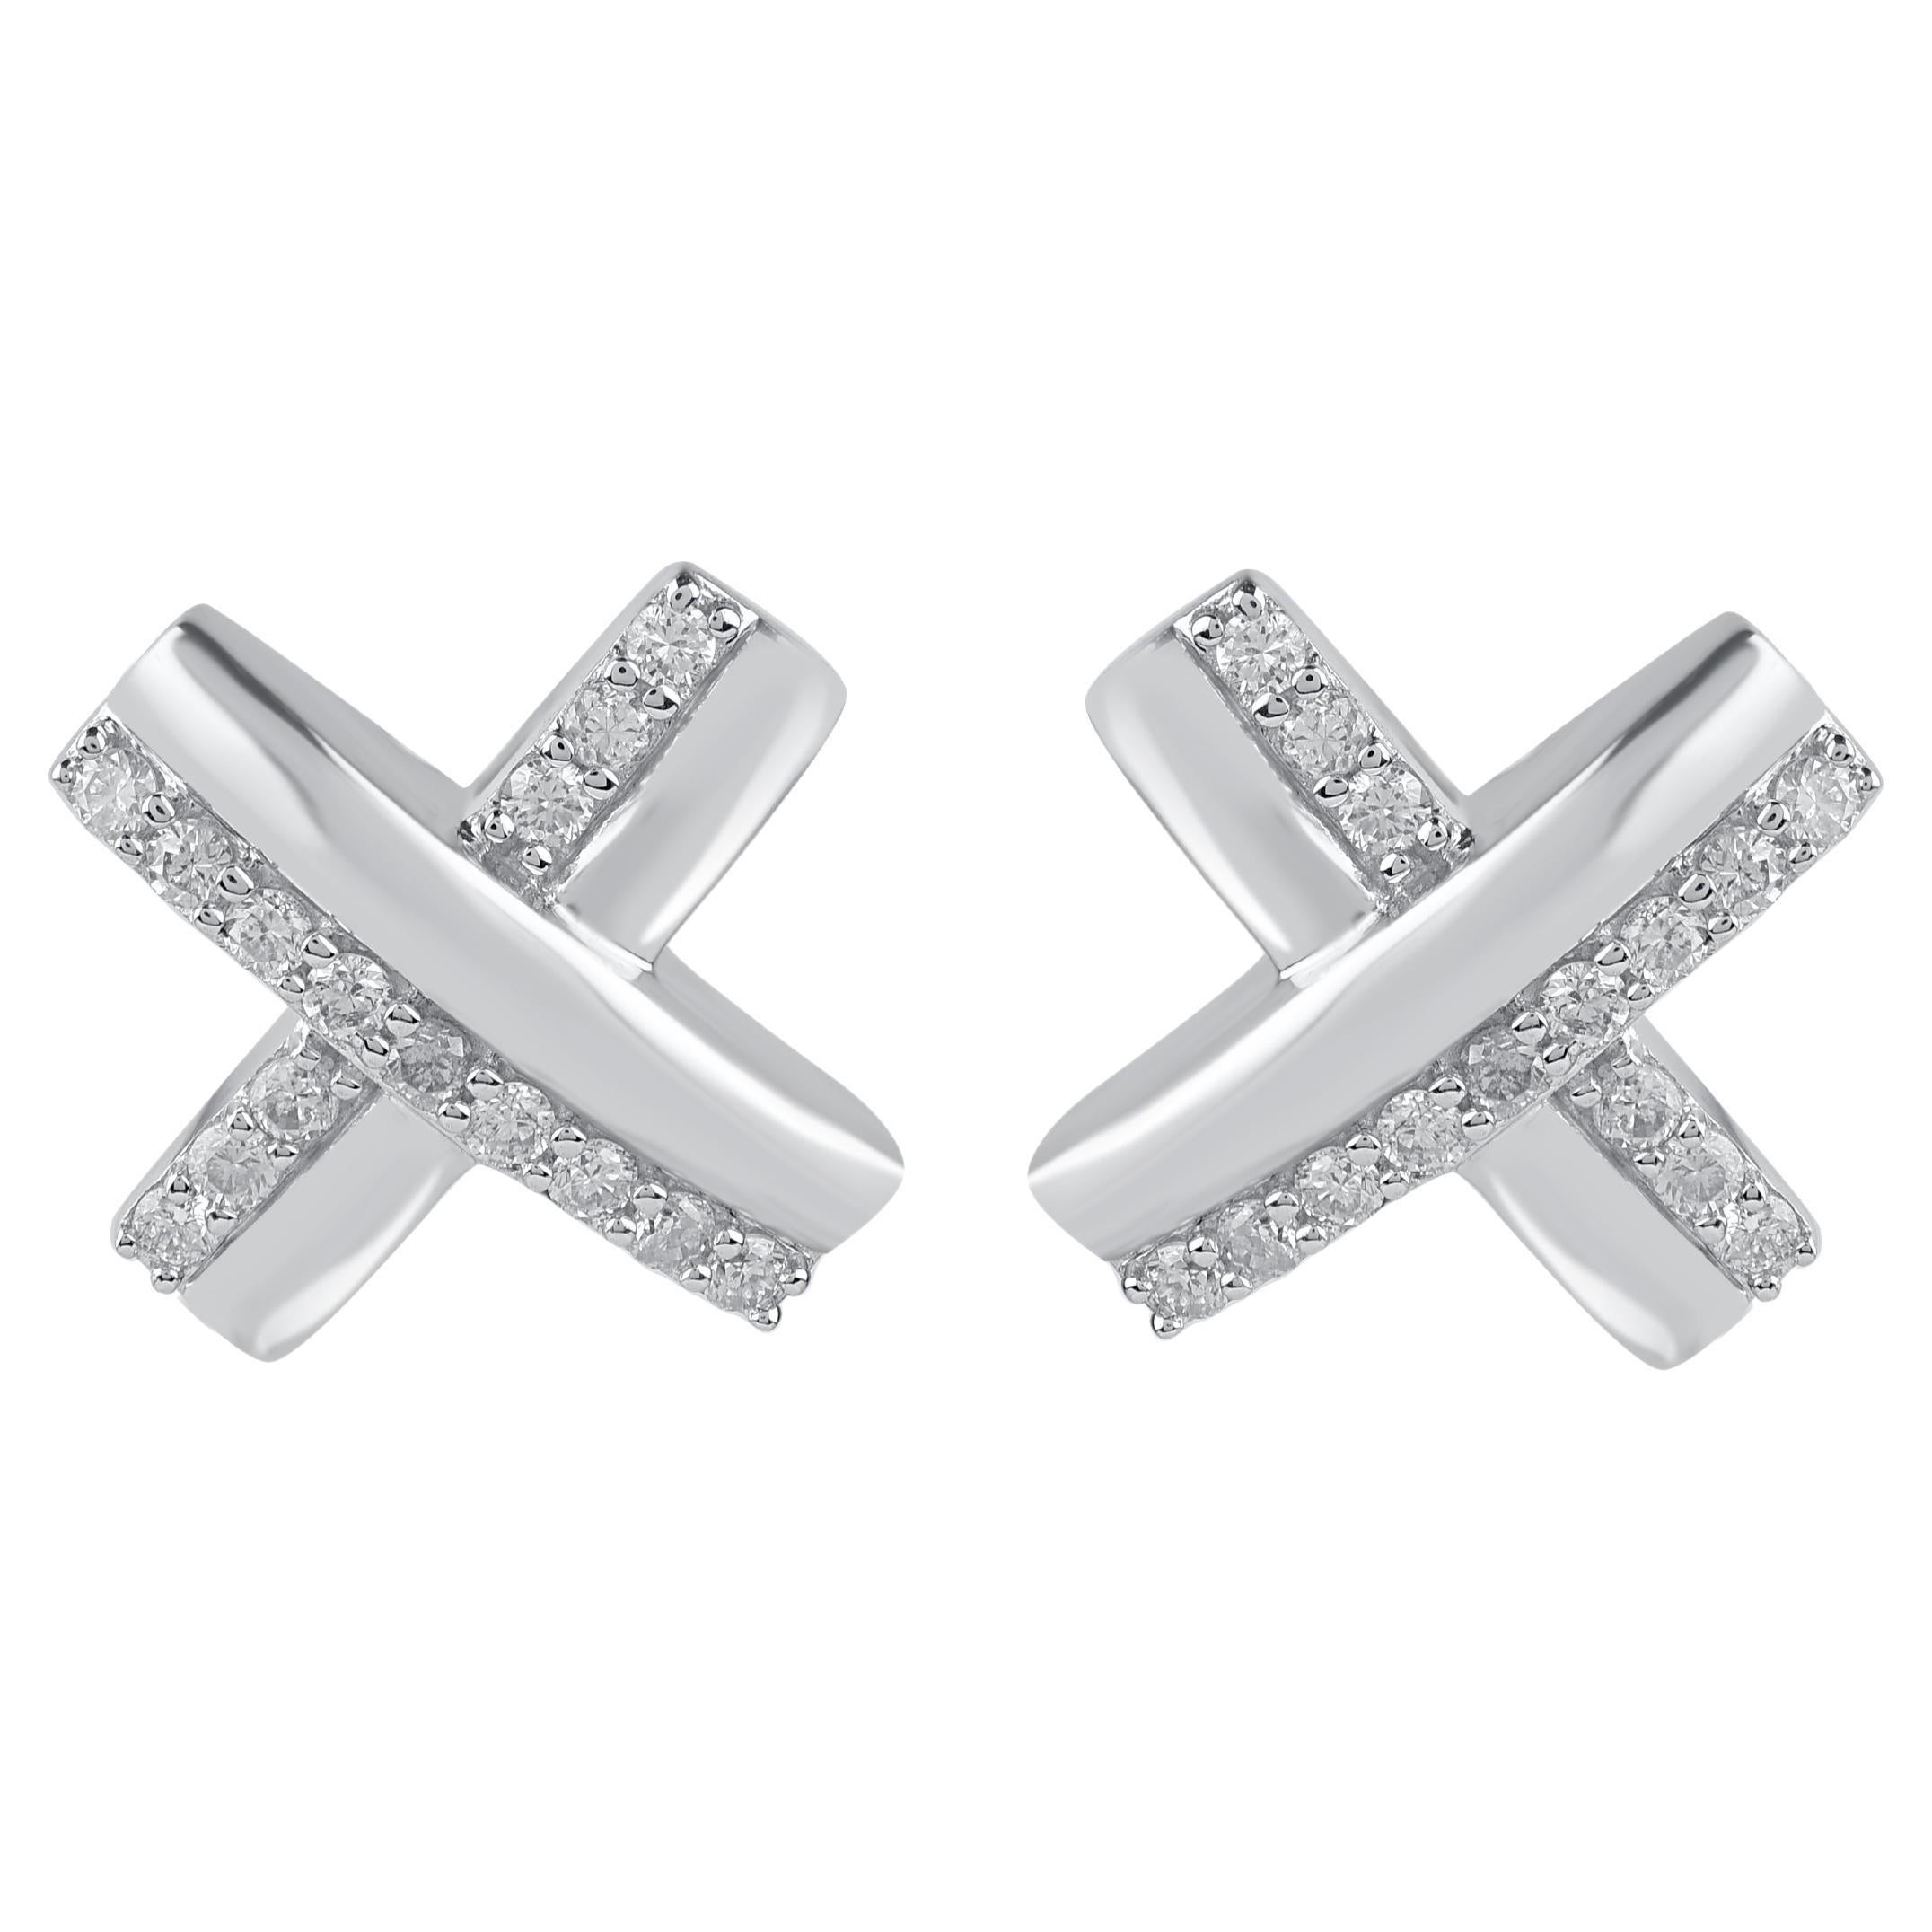 TJD 0.20 Carat Brilliant Cut Diamond 14KT White Gold 'X' Shape Stud Earrings For Sale